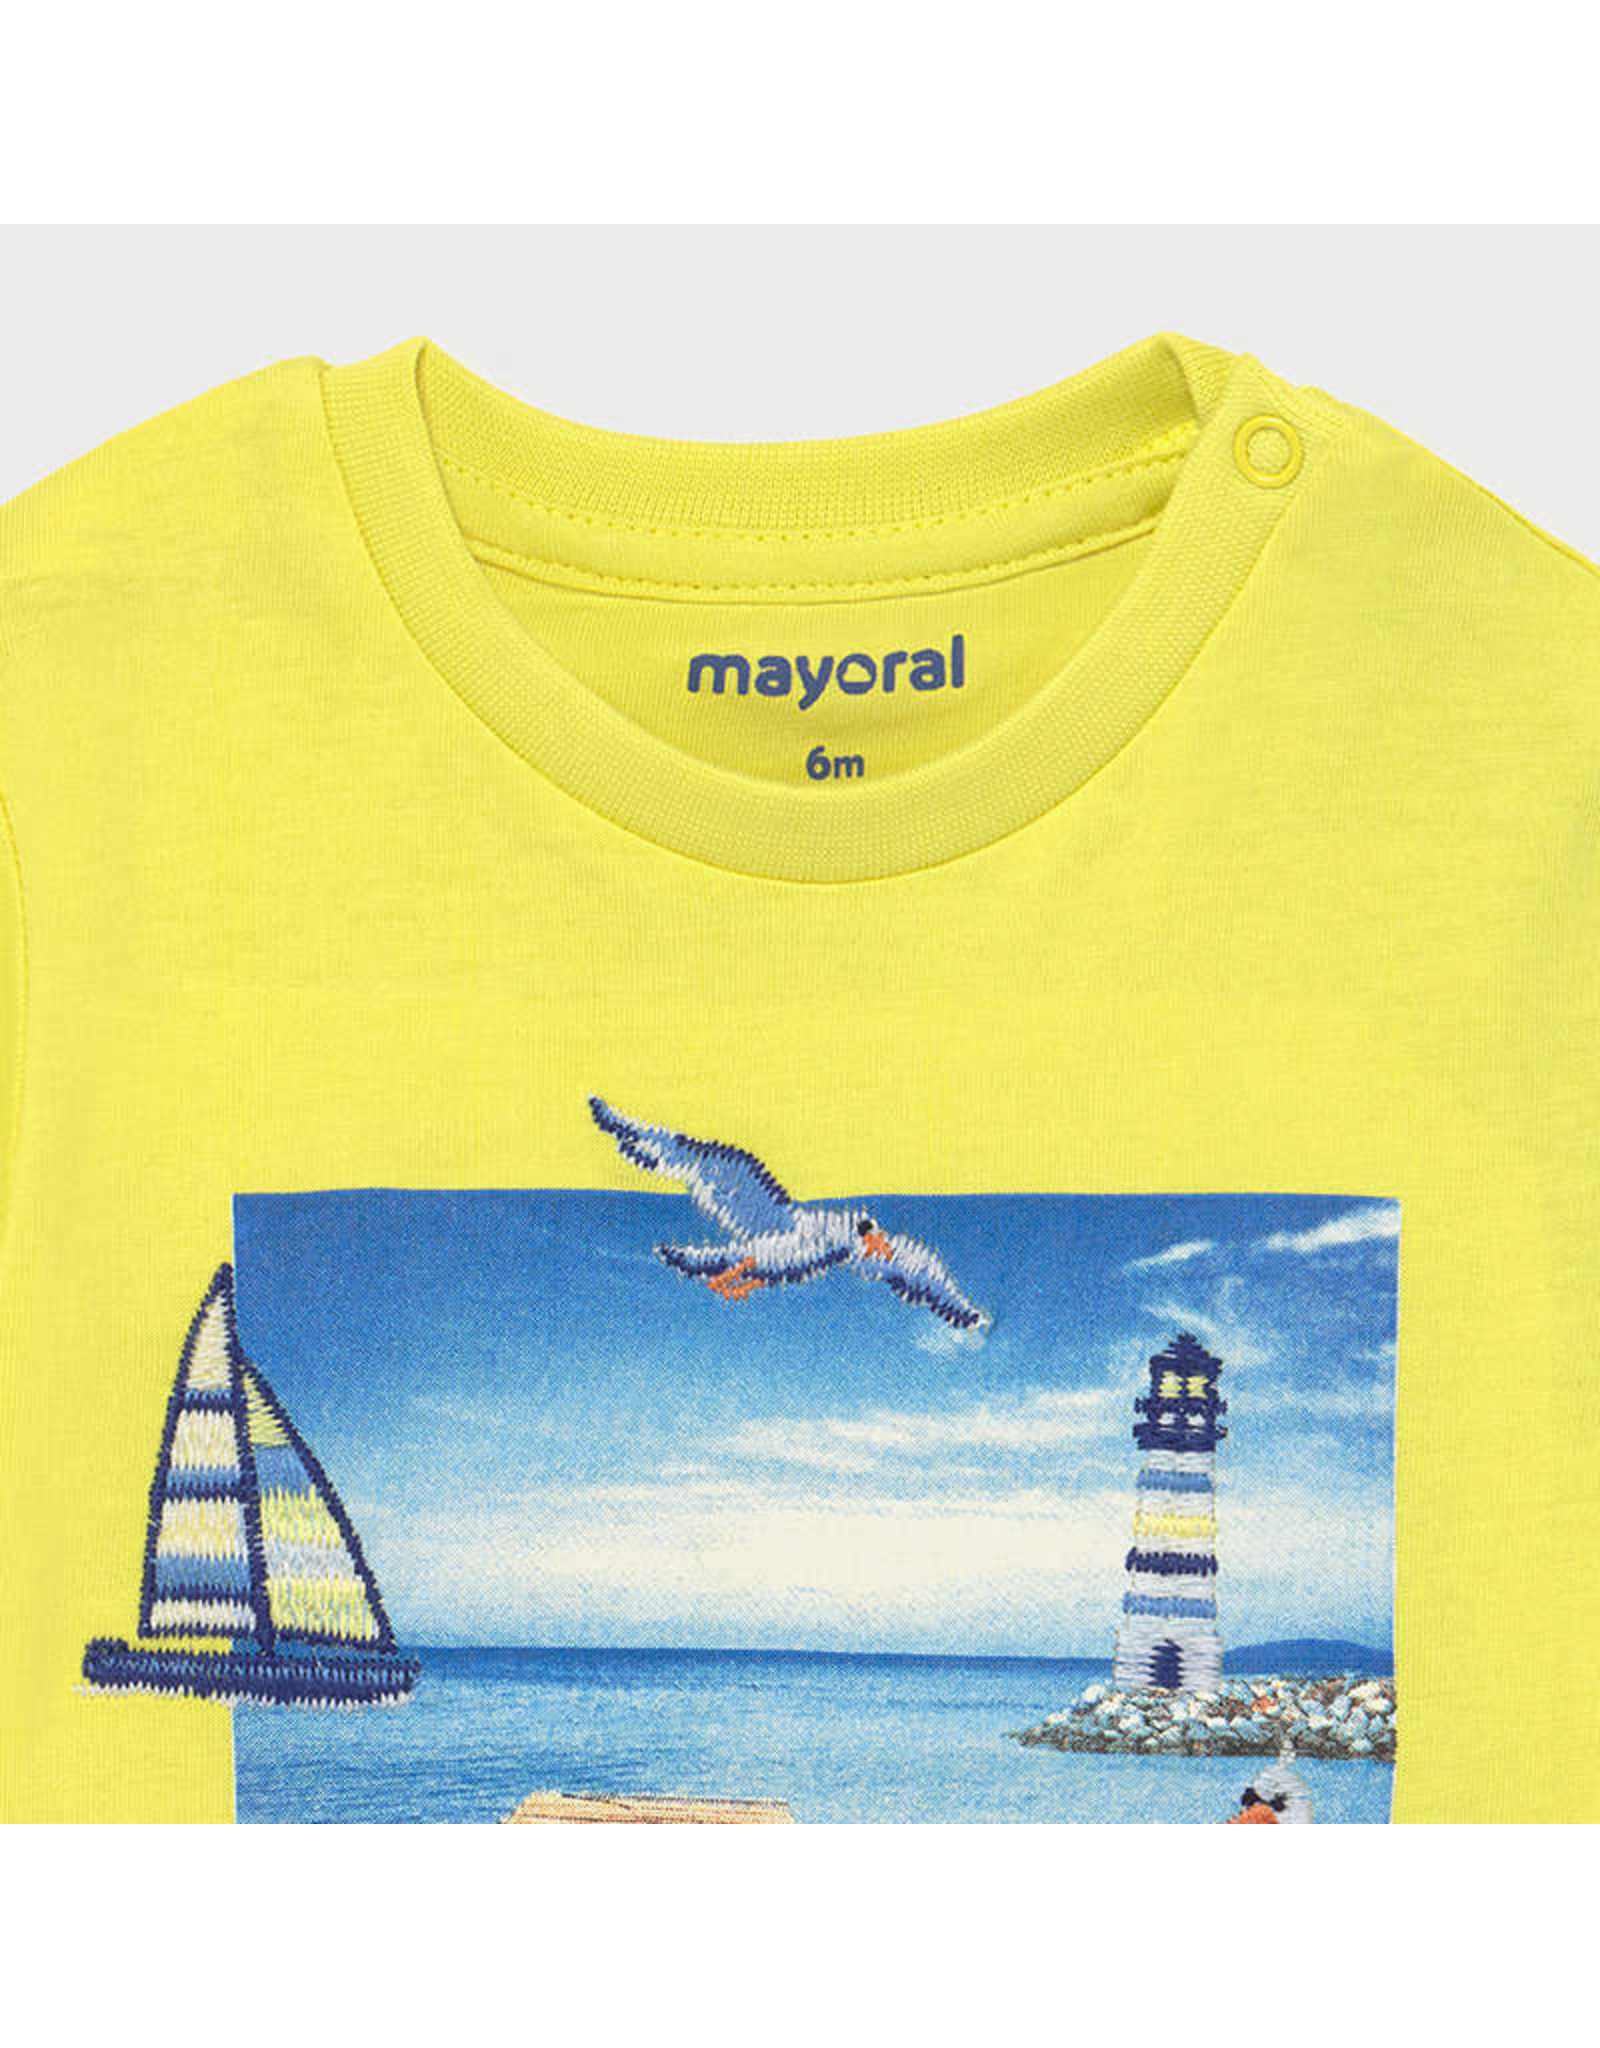 Mayoral Short Sleeve T-Shirt - Boys